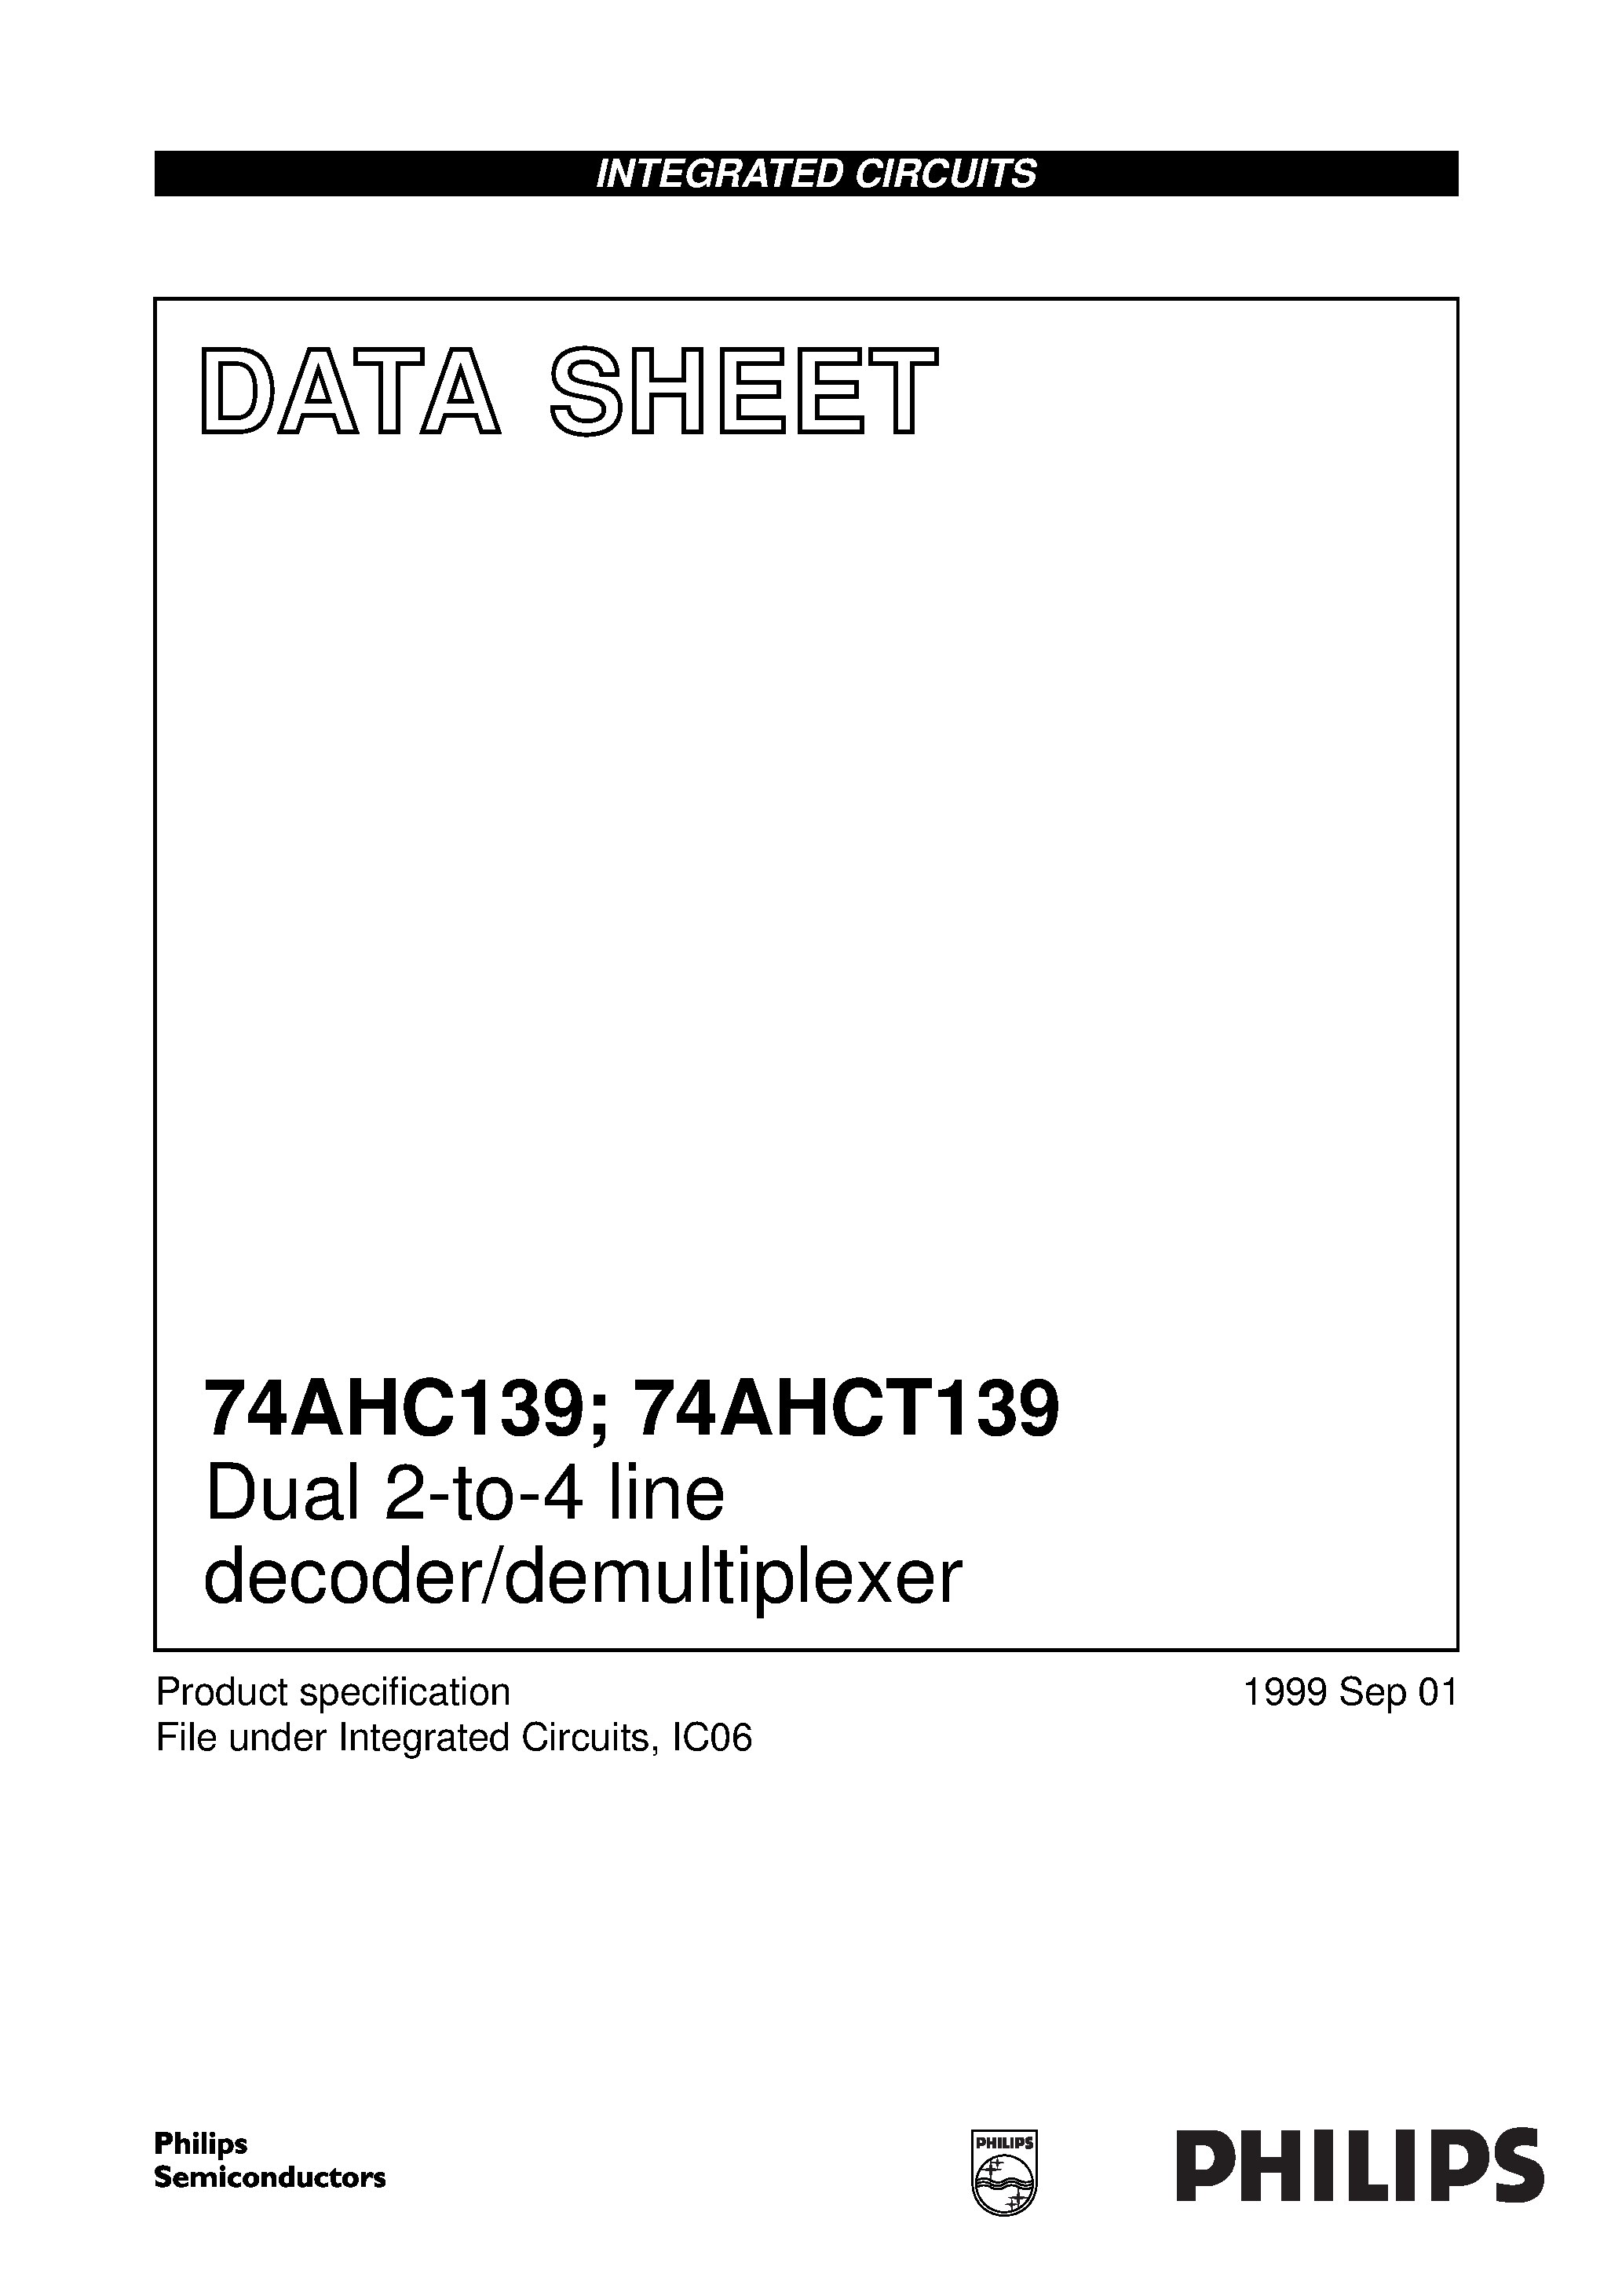 Даташит 74AHC139PWDH - Dual 2-to-4 line decoder/demultiplexer страница 1